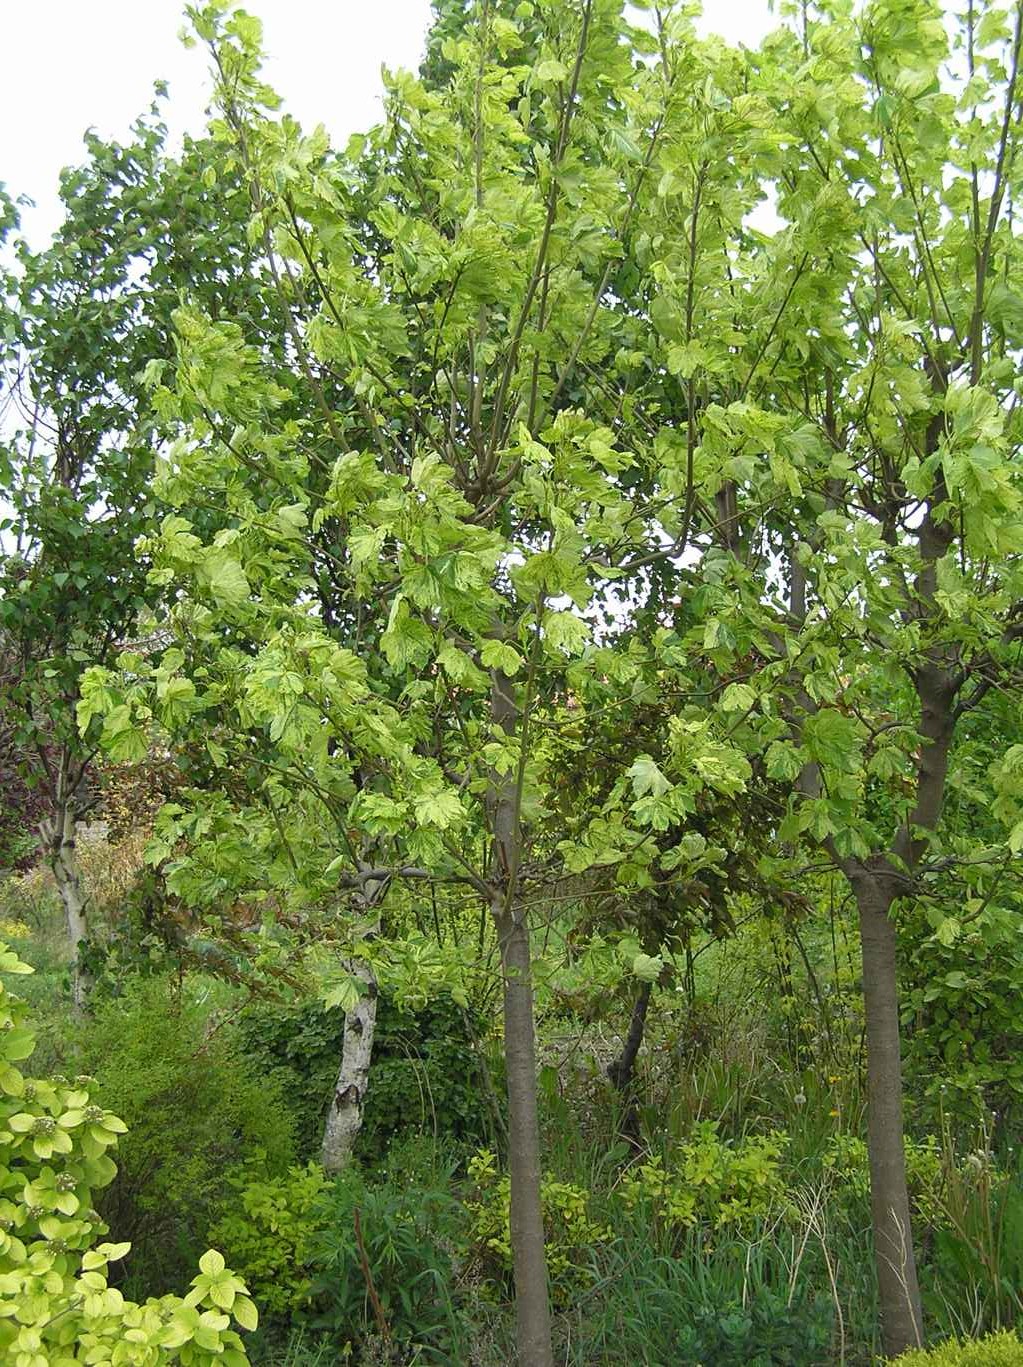 Klon jawor "Leopoldii" / Acer pseudoplatanus "Leopoldii"